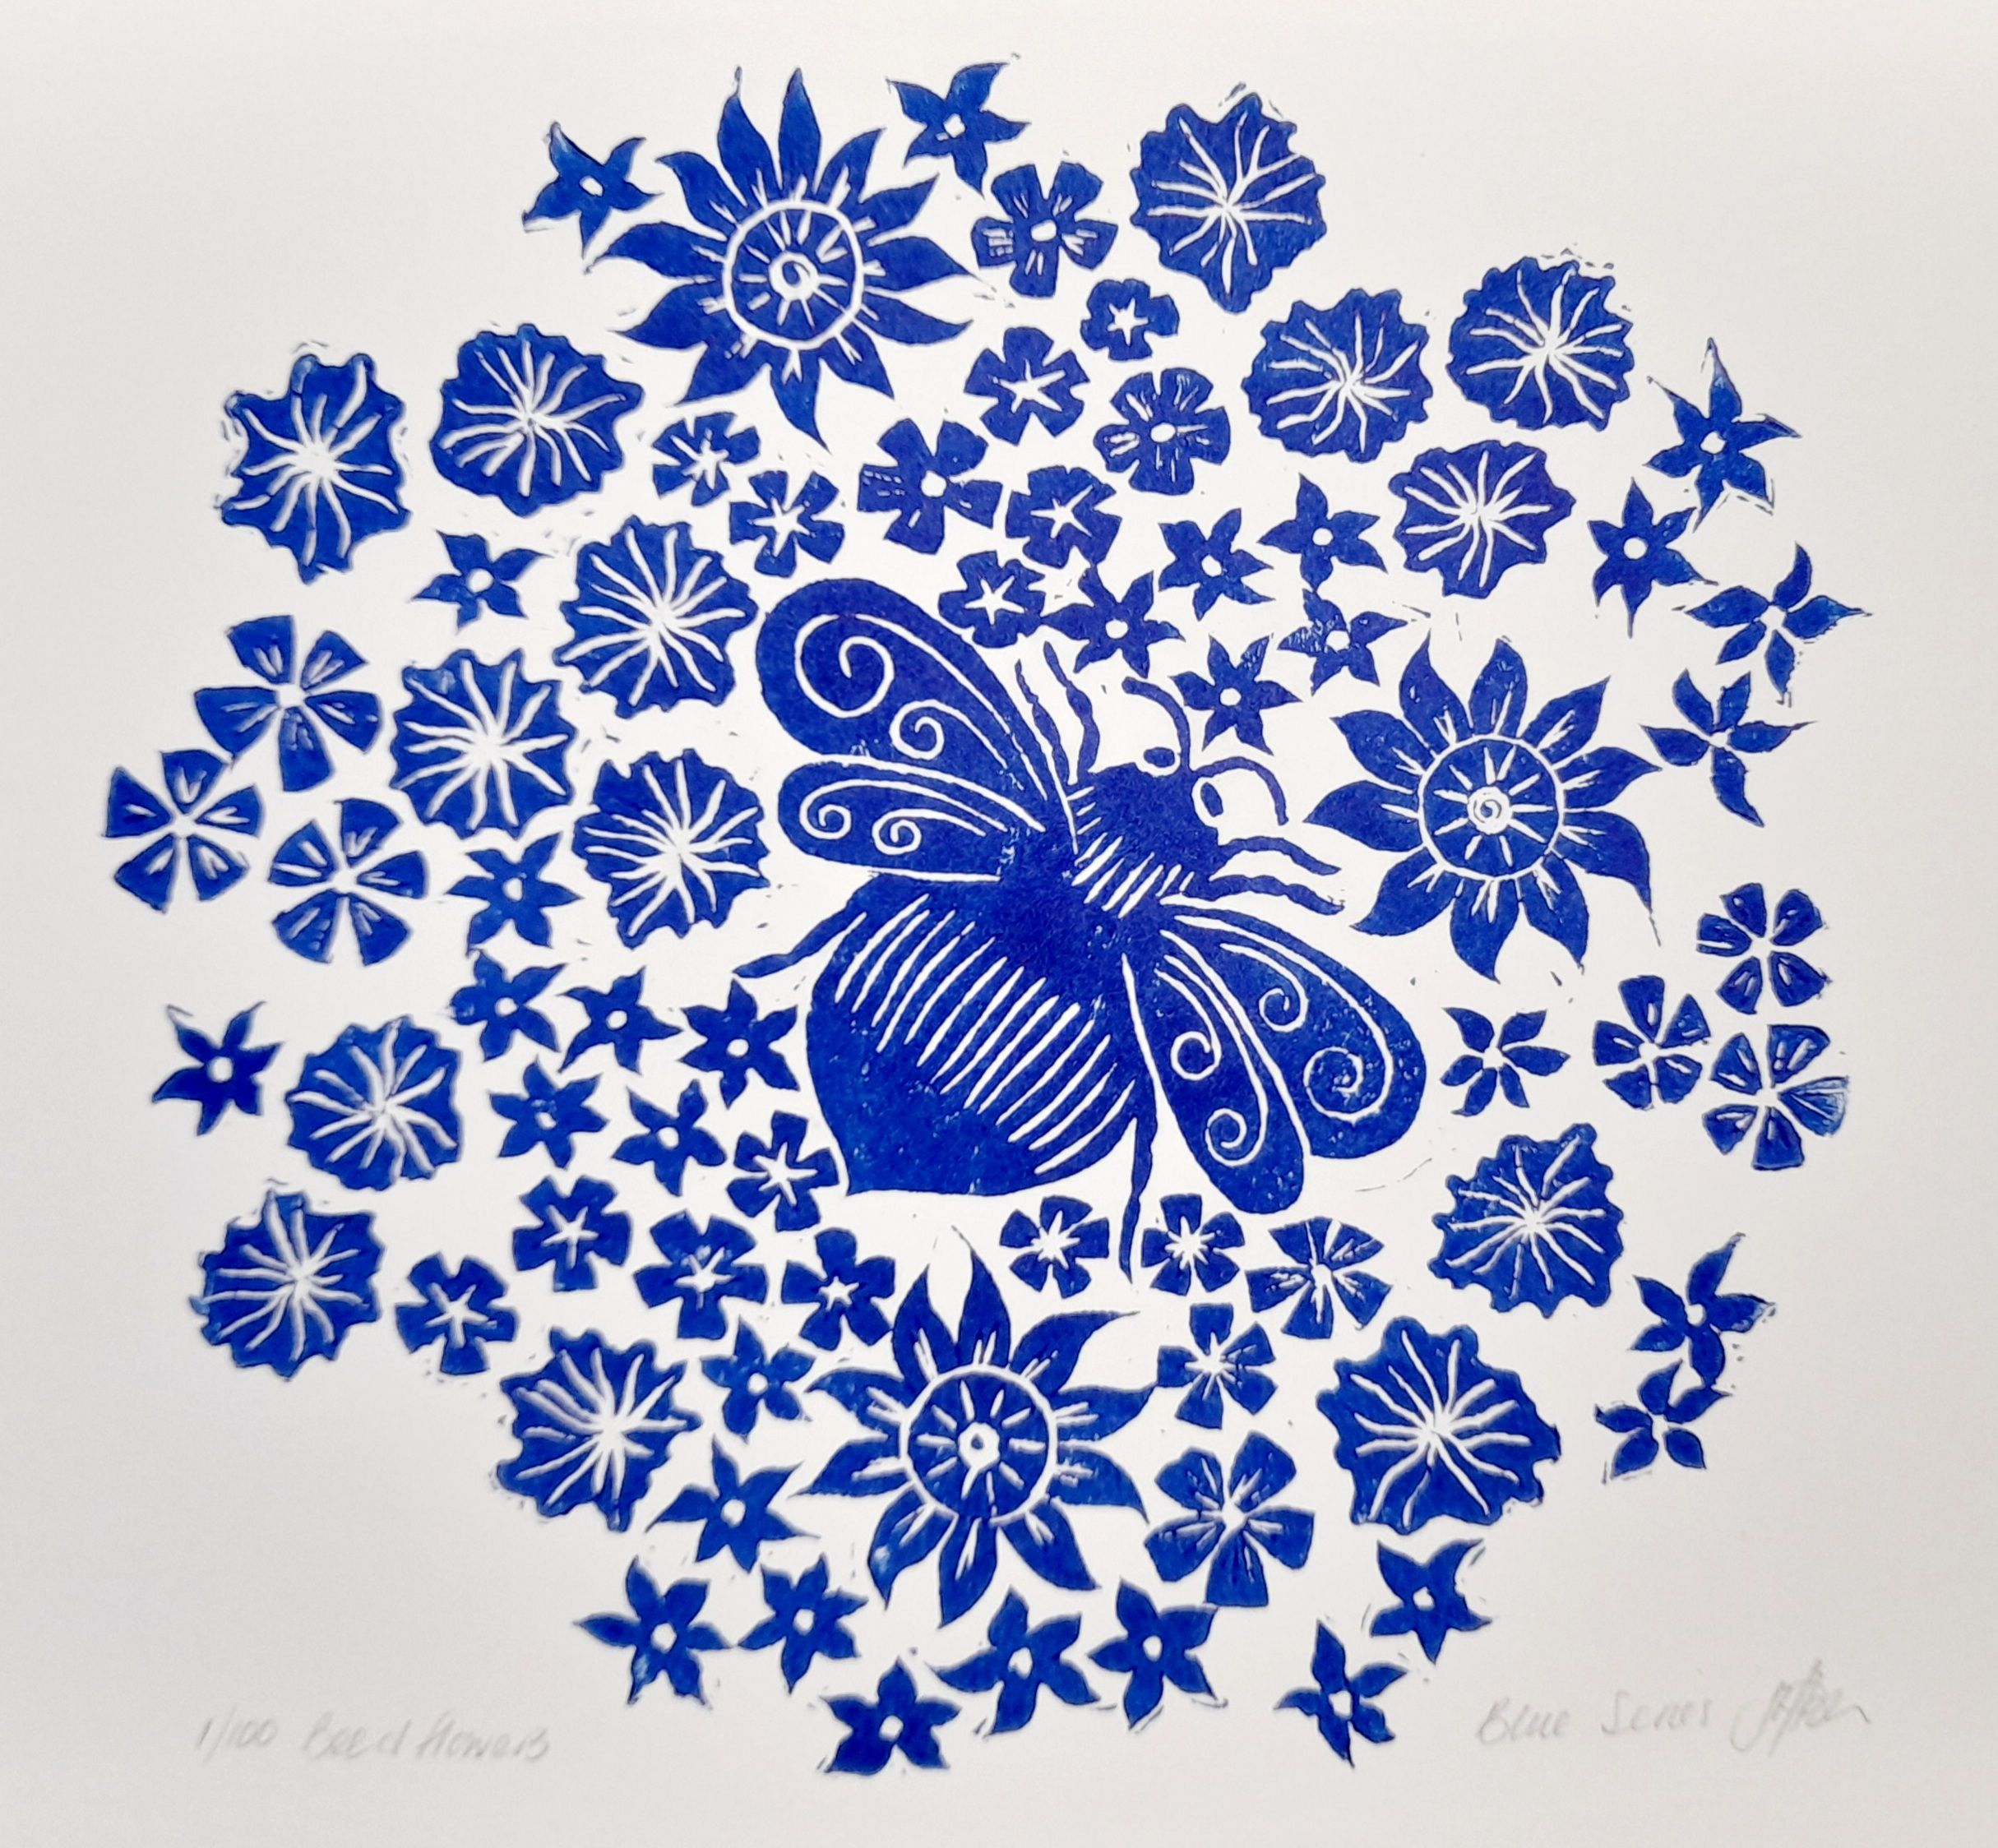 Bee & Flowers Circle Print by Jess Harrington